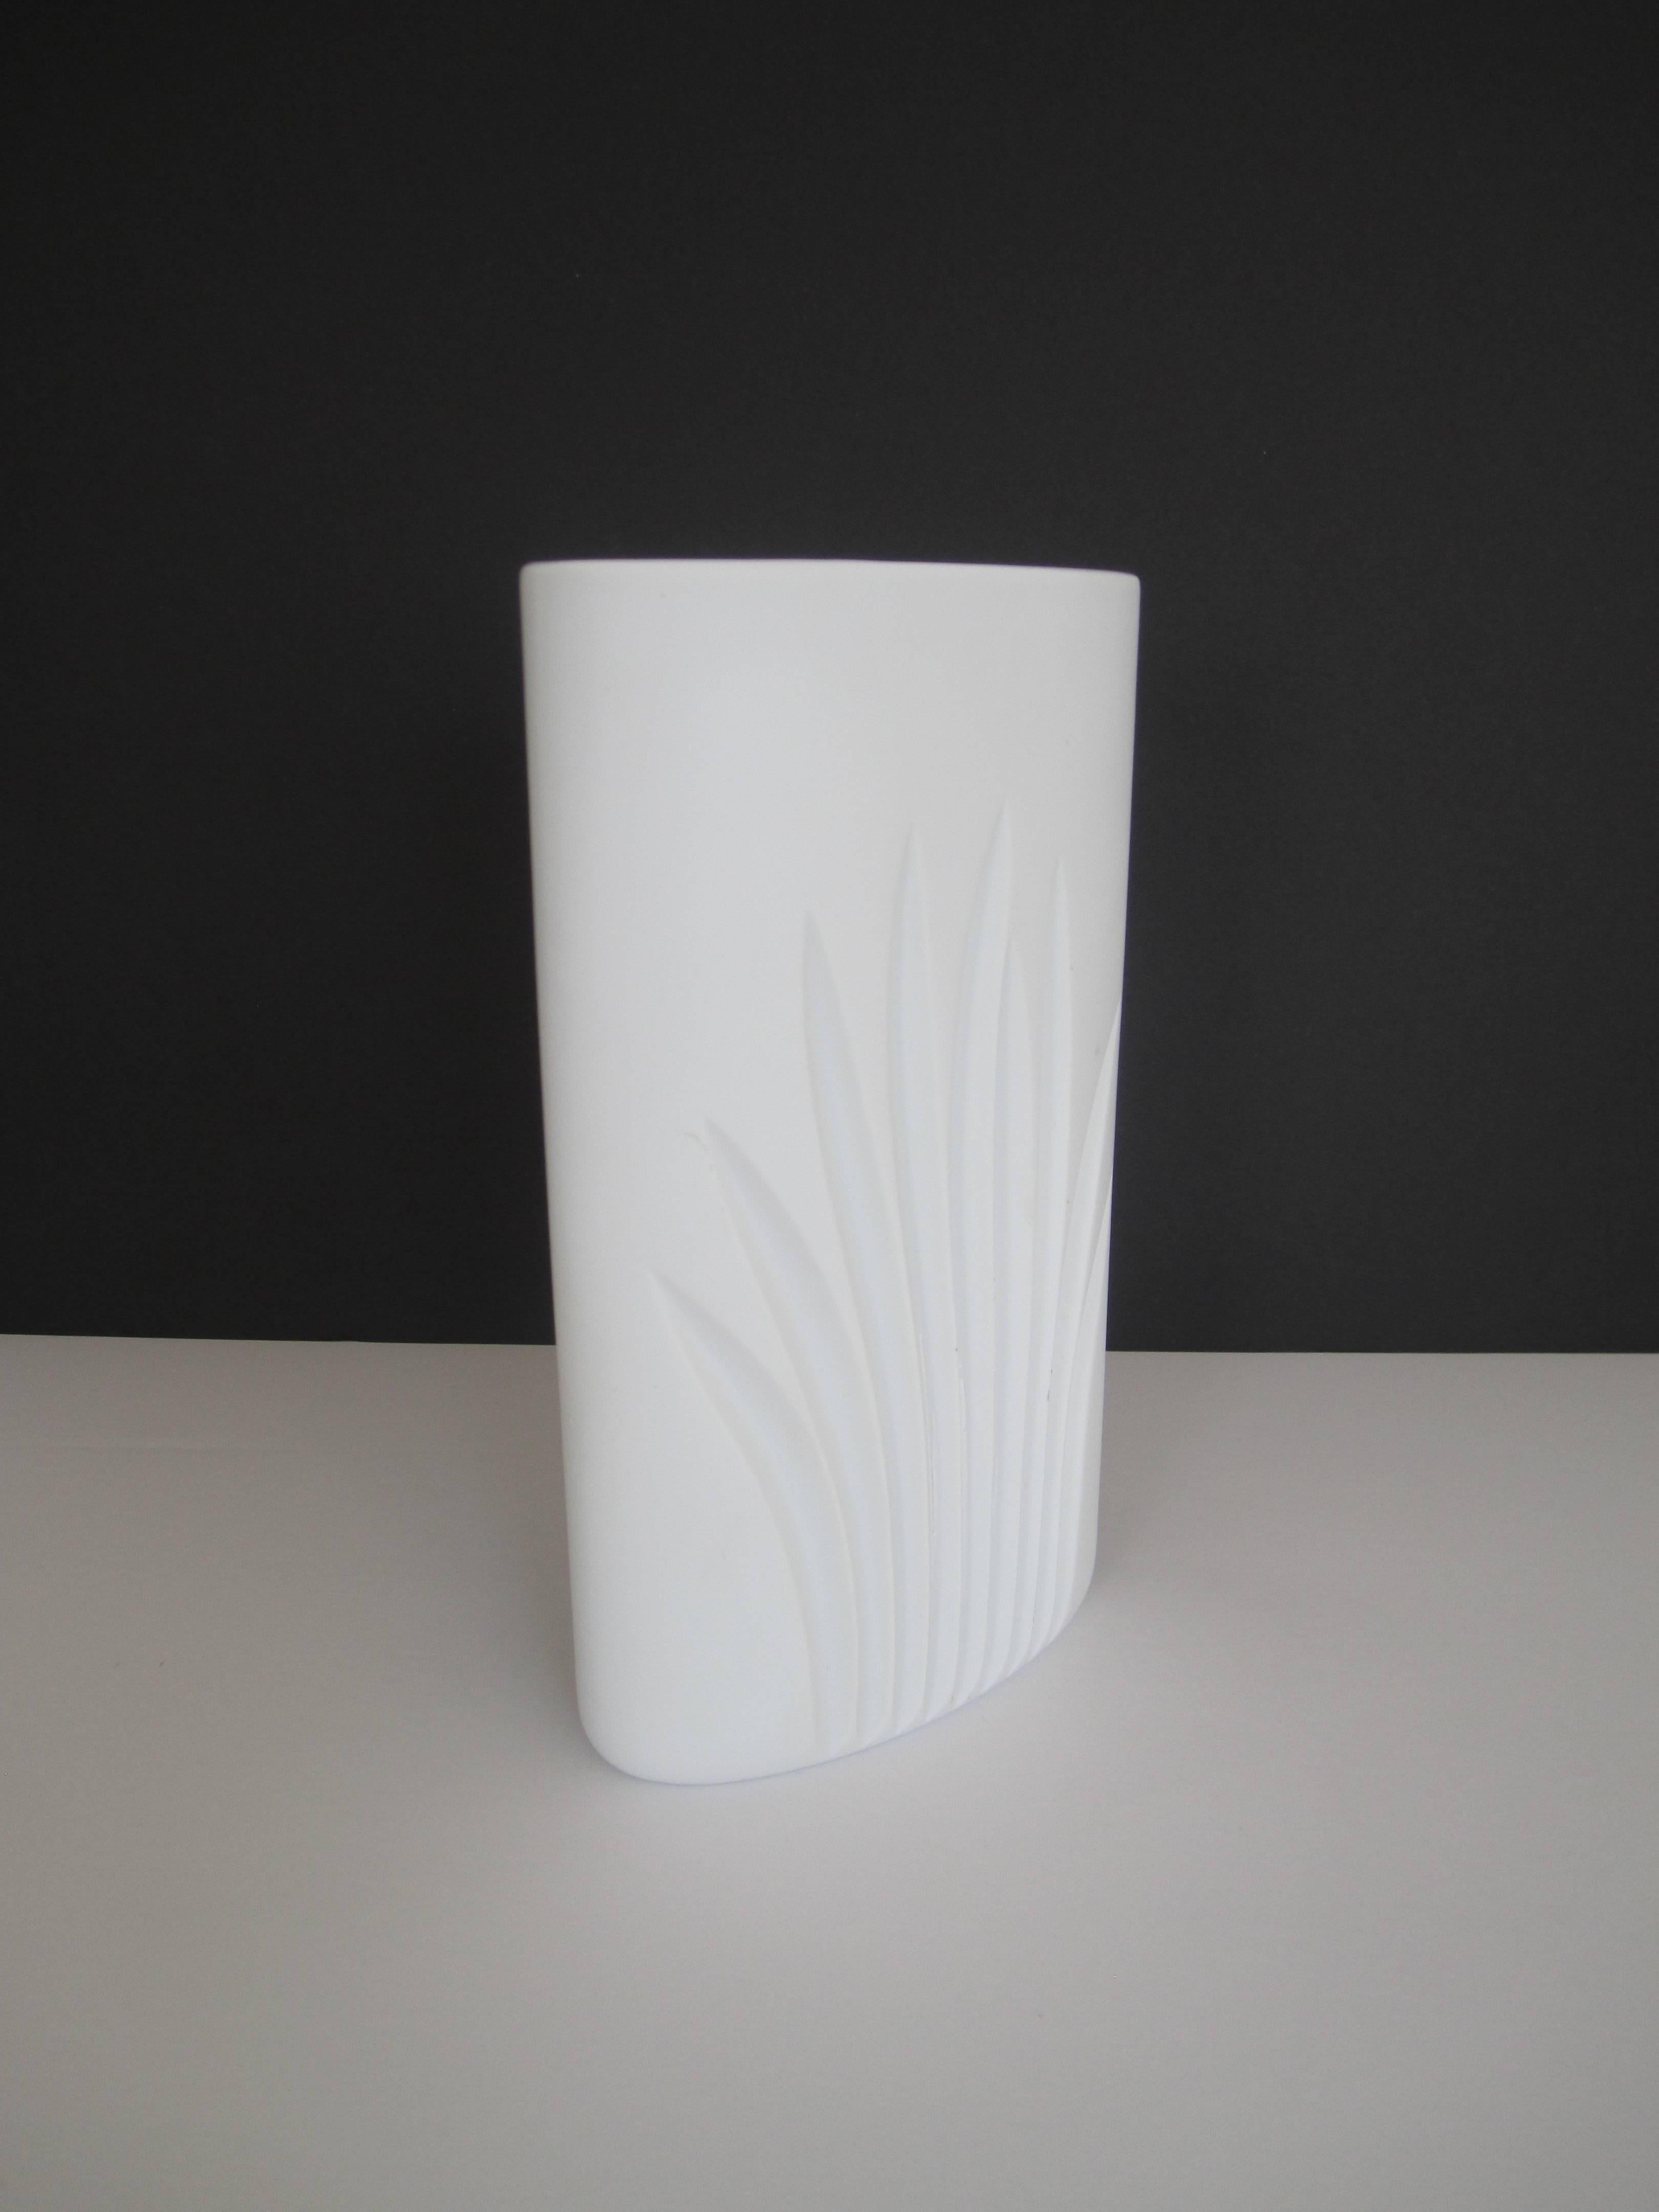 Unglazed German White Matte Porcelain Pottery Vase by Rosenthal